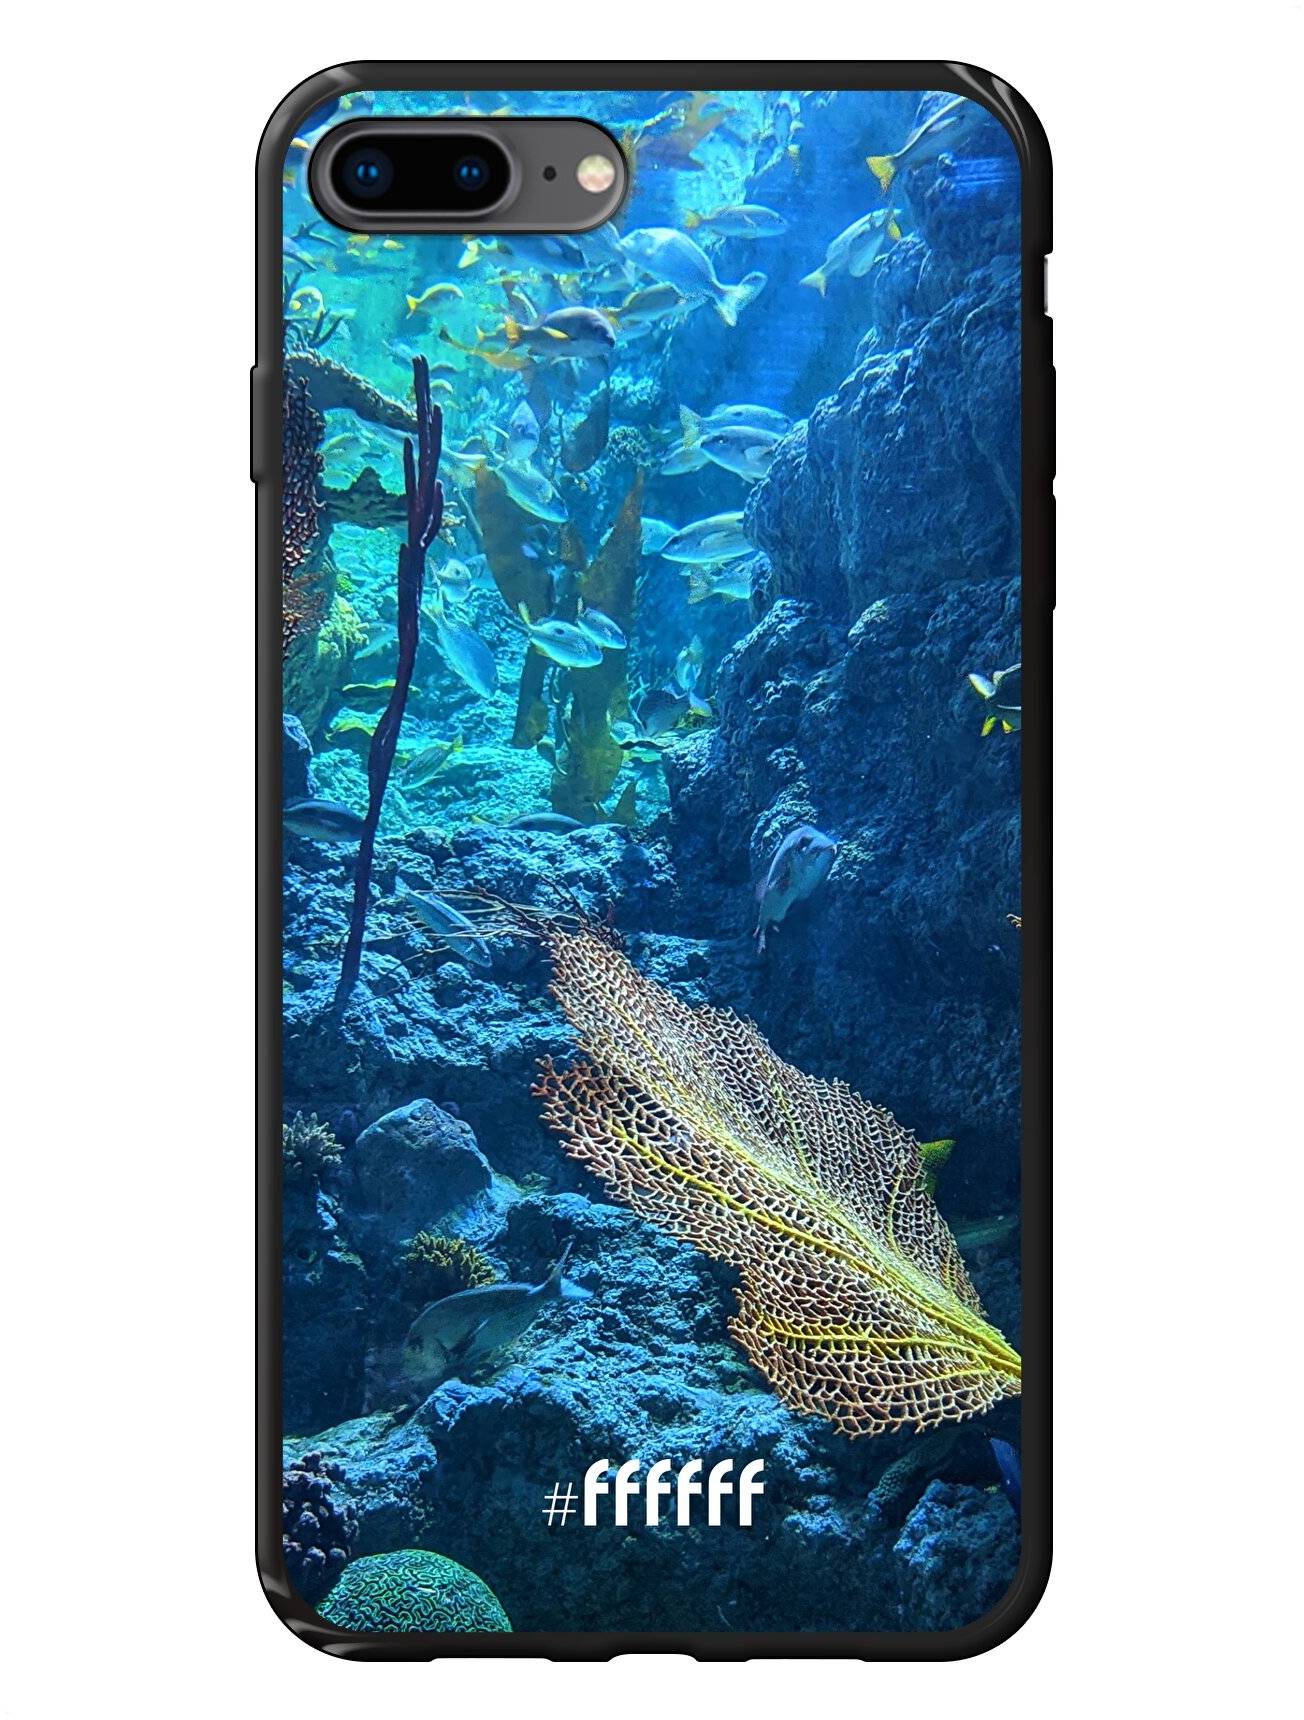 Coral Reef iPhone 7 Plus